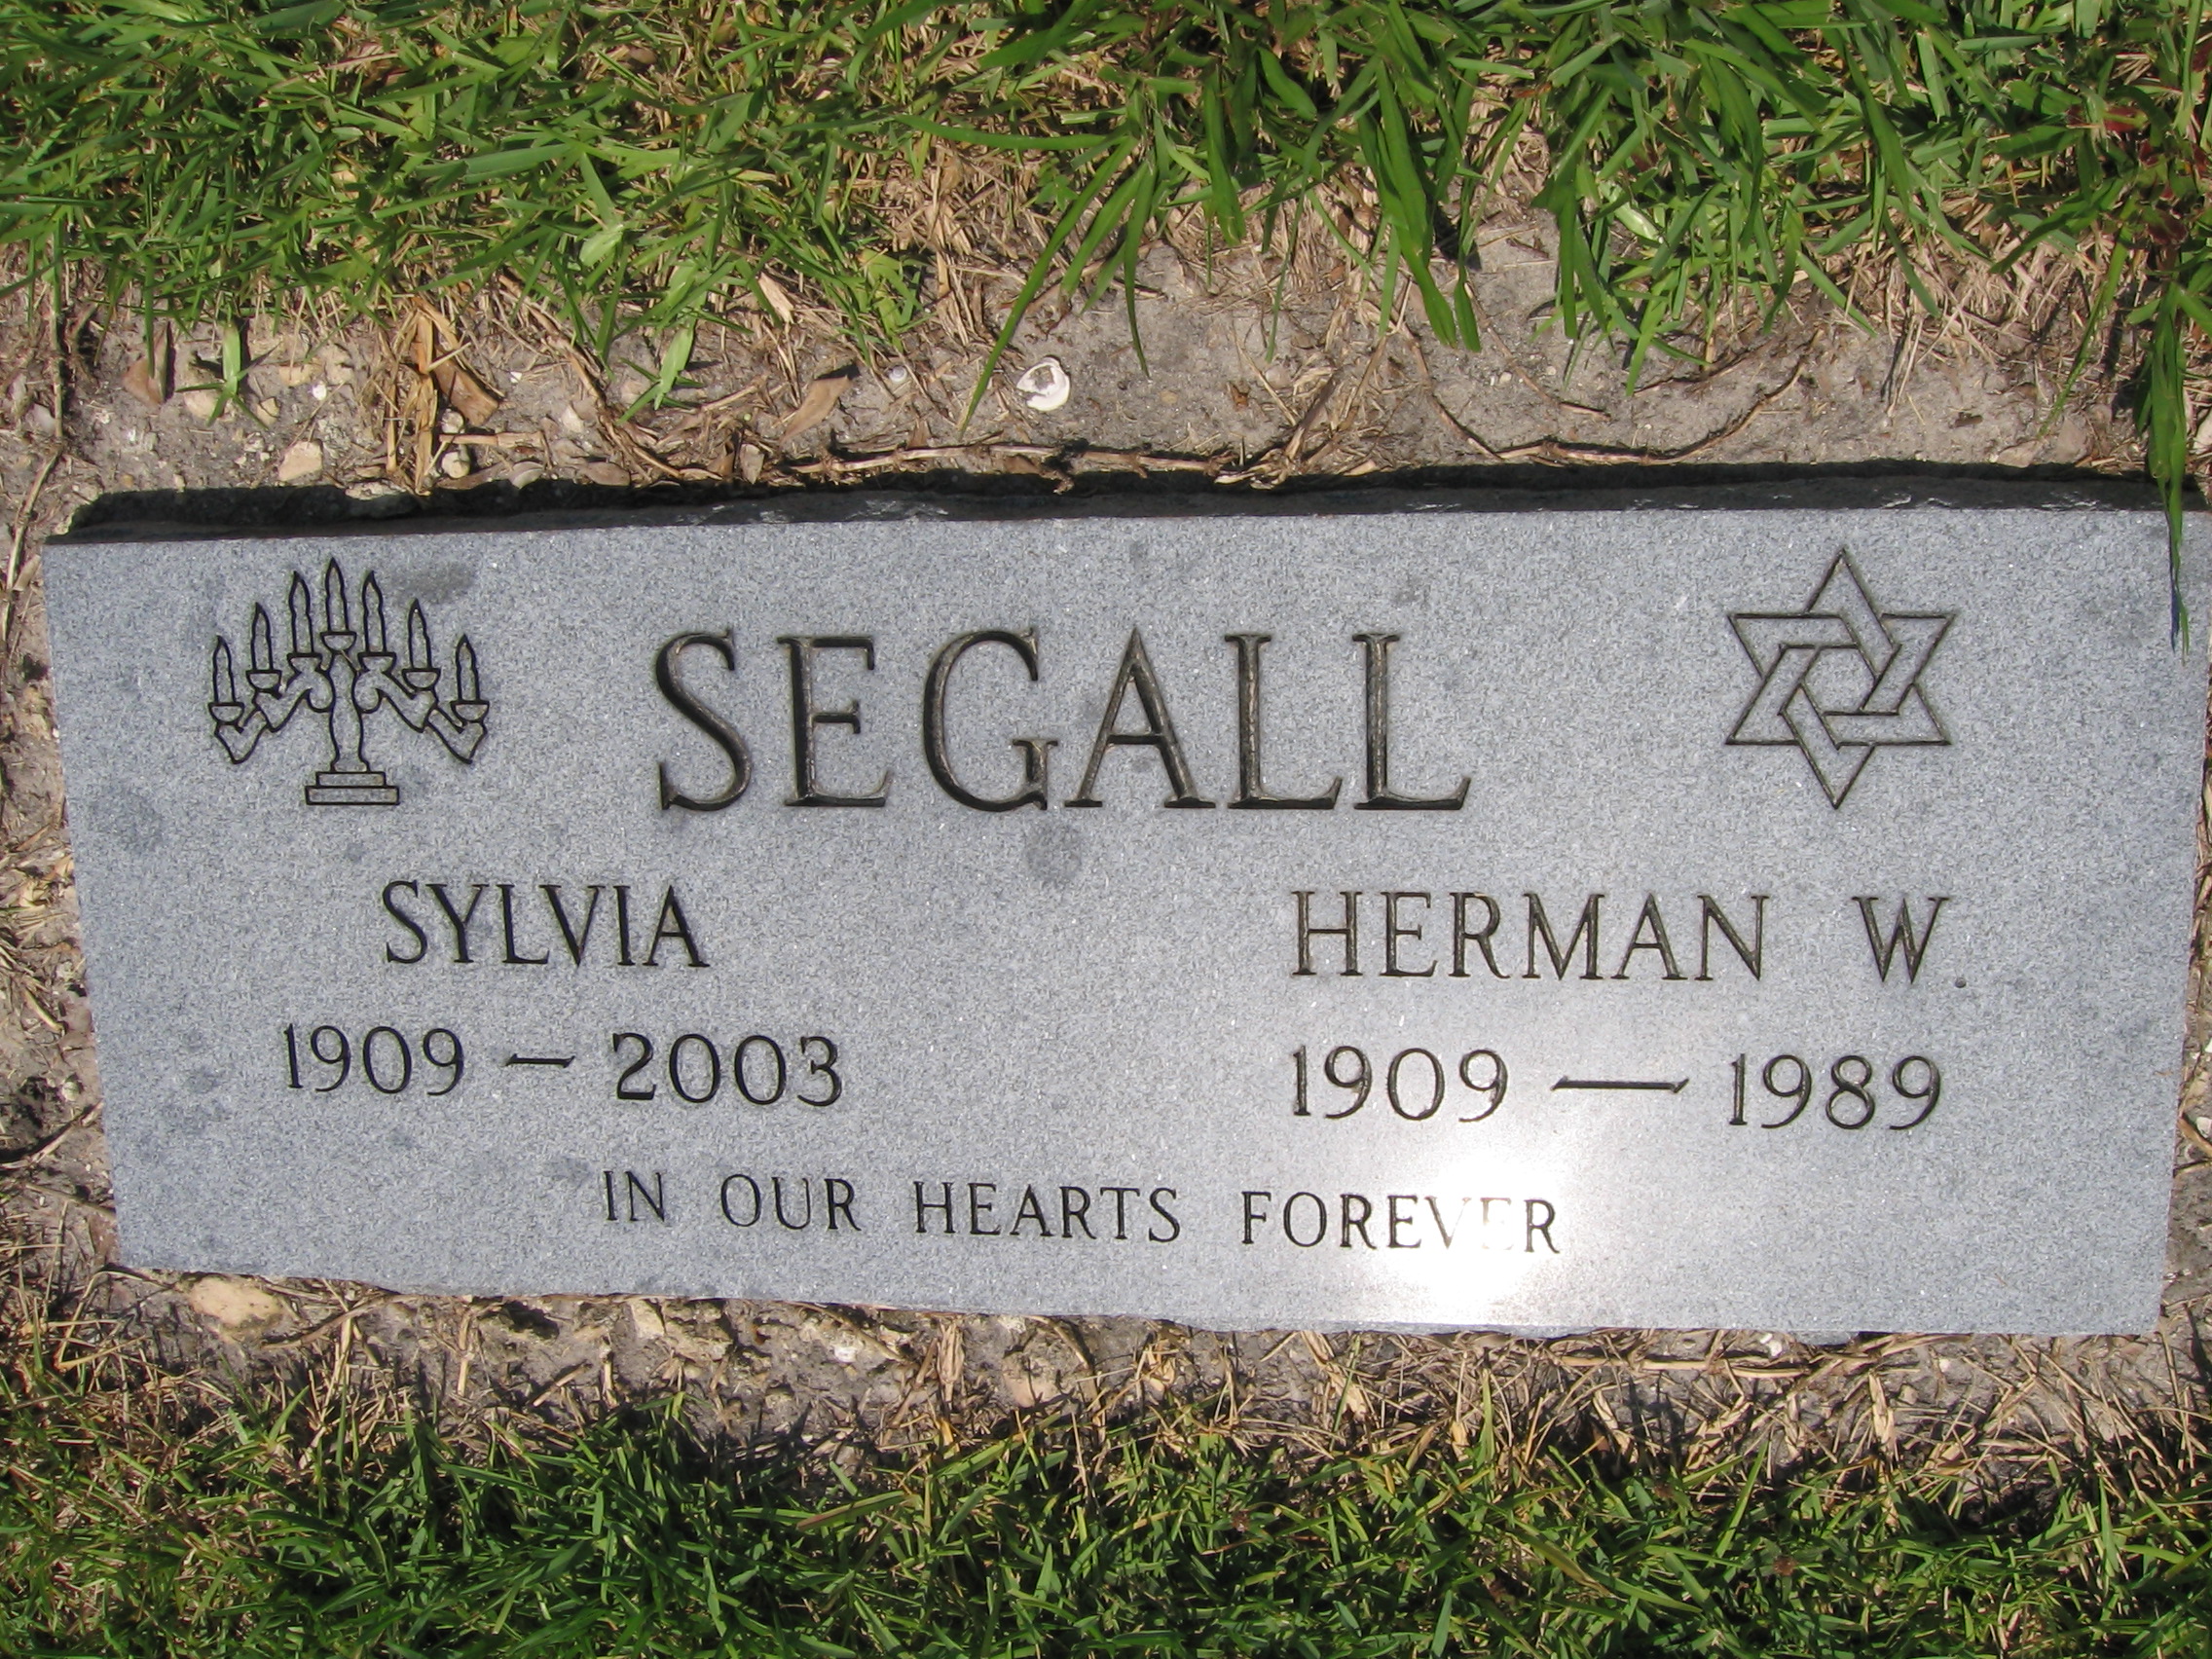 Herman W Segall